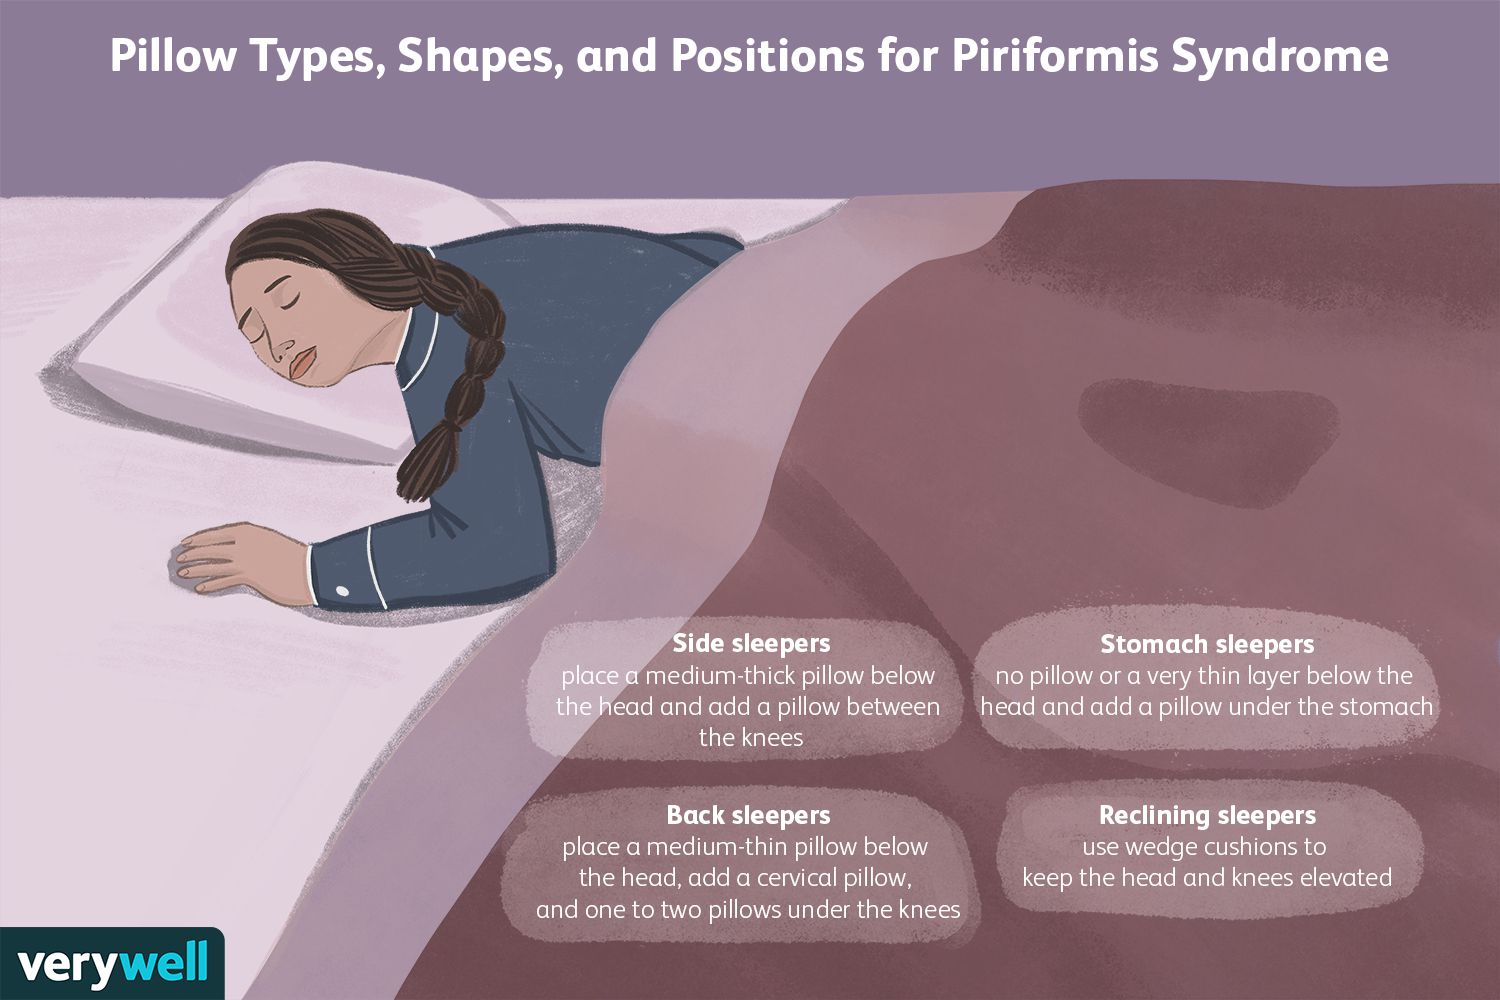 how to sleep with piriformis syndrome?